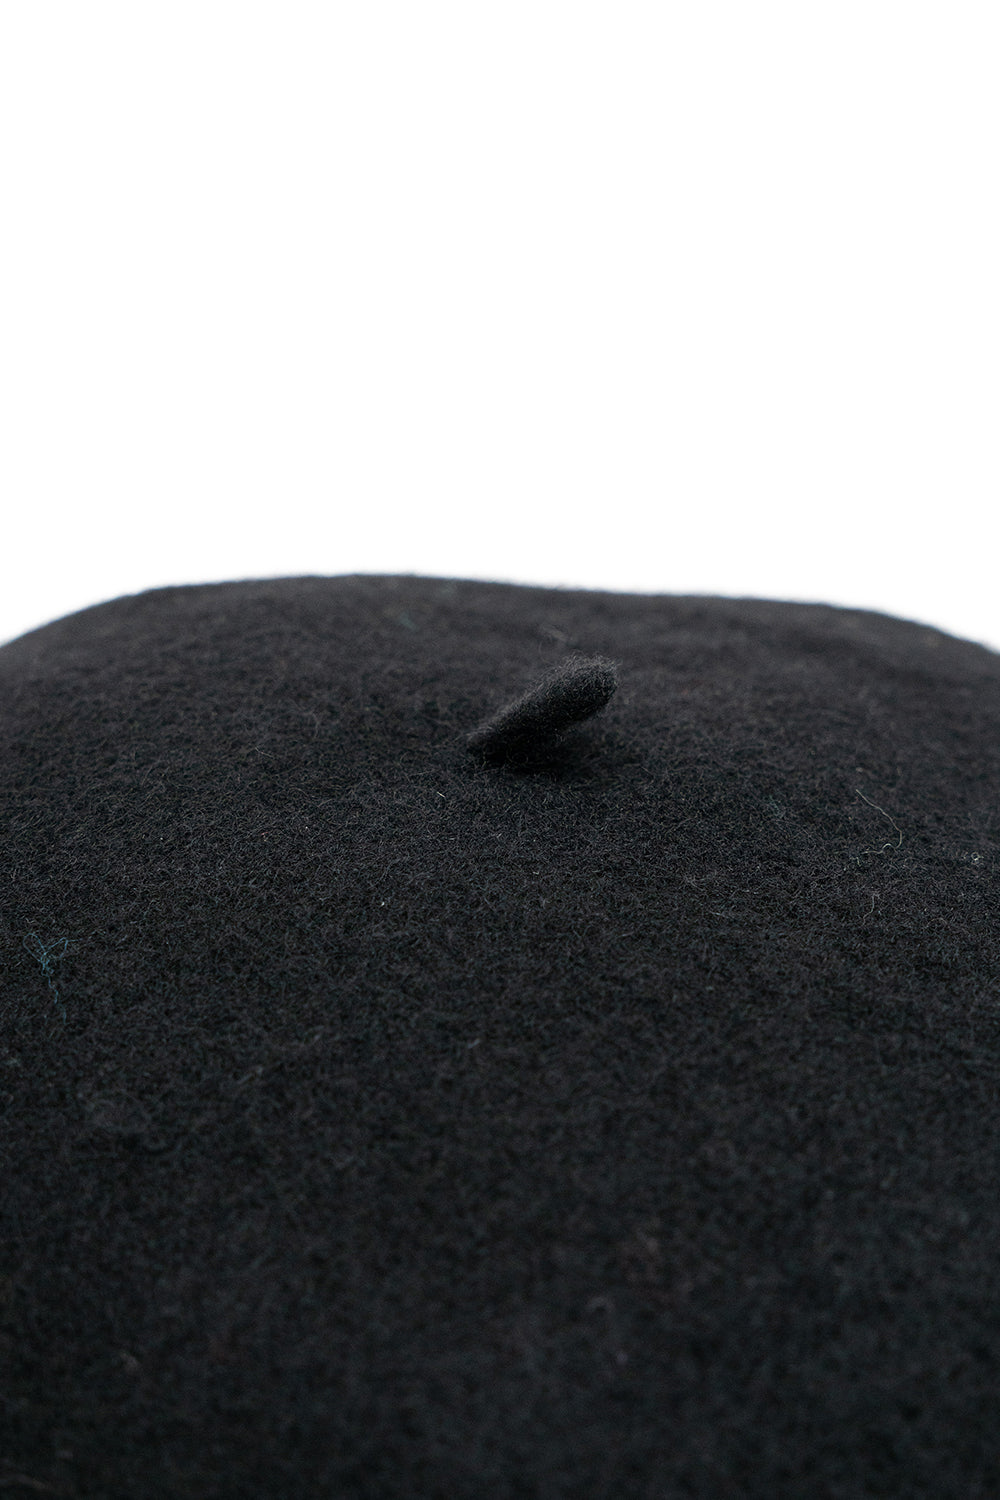 My Accessories London wool Beret in Black| Hat | Womens Accessories | Winter | Autumn